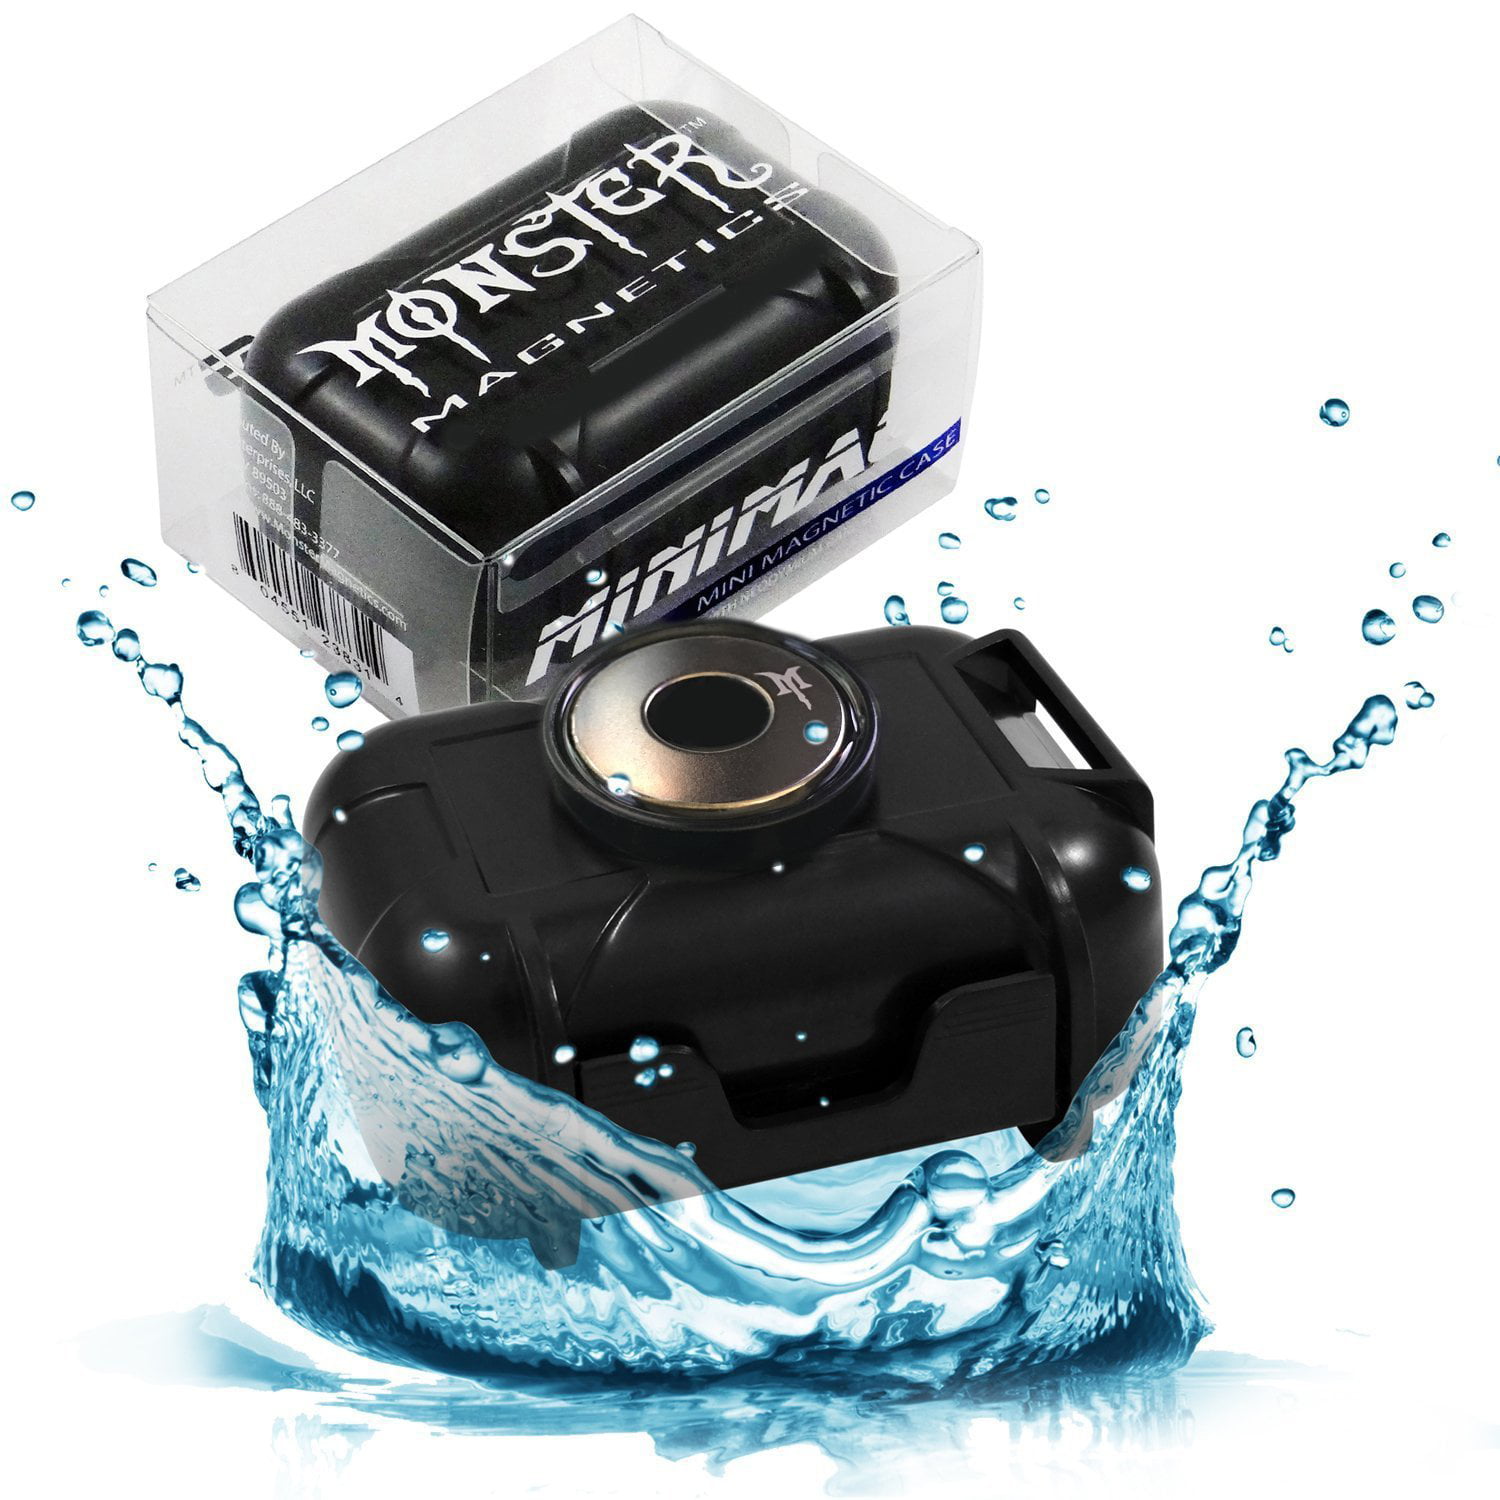 Magnetic Hide A Key Waterproof Magnet security Box Holder Under Car 1.4*3.2*1.4 